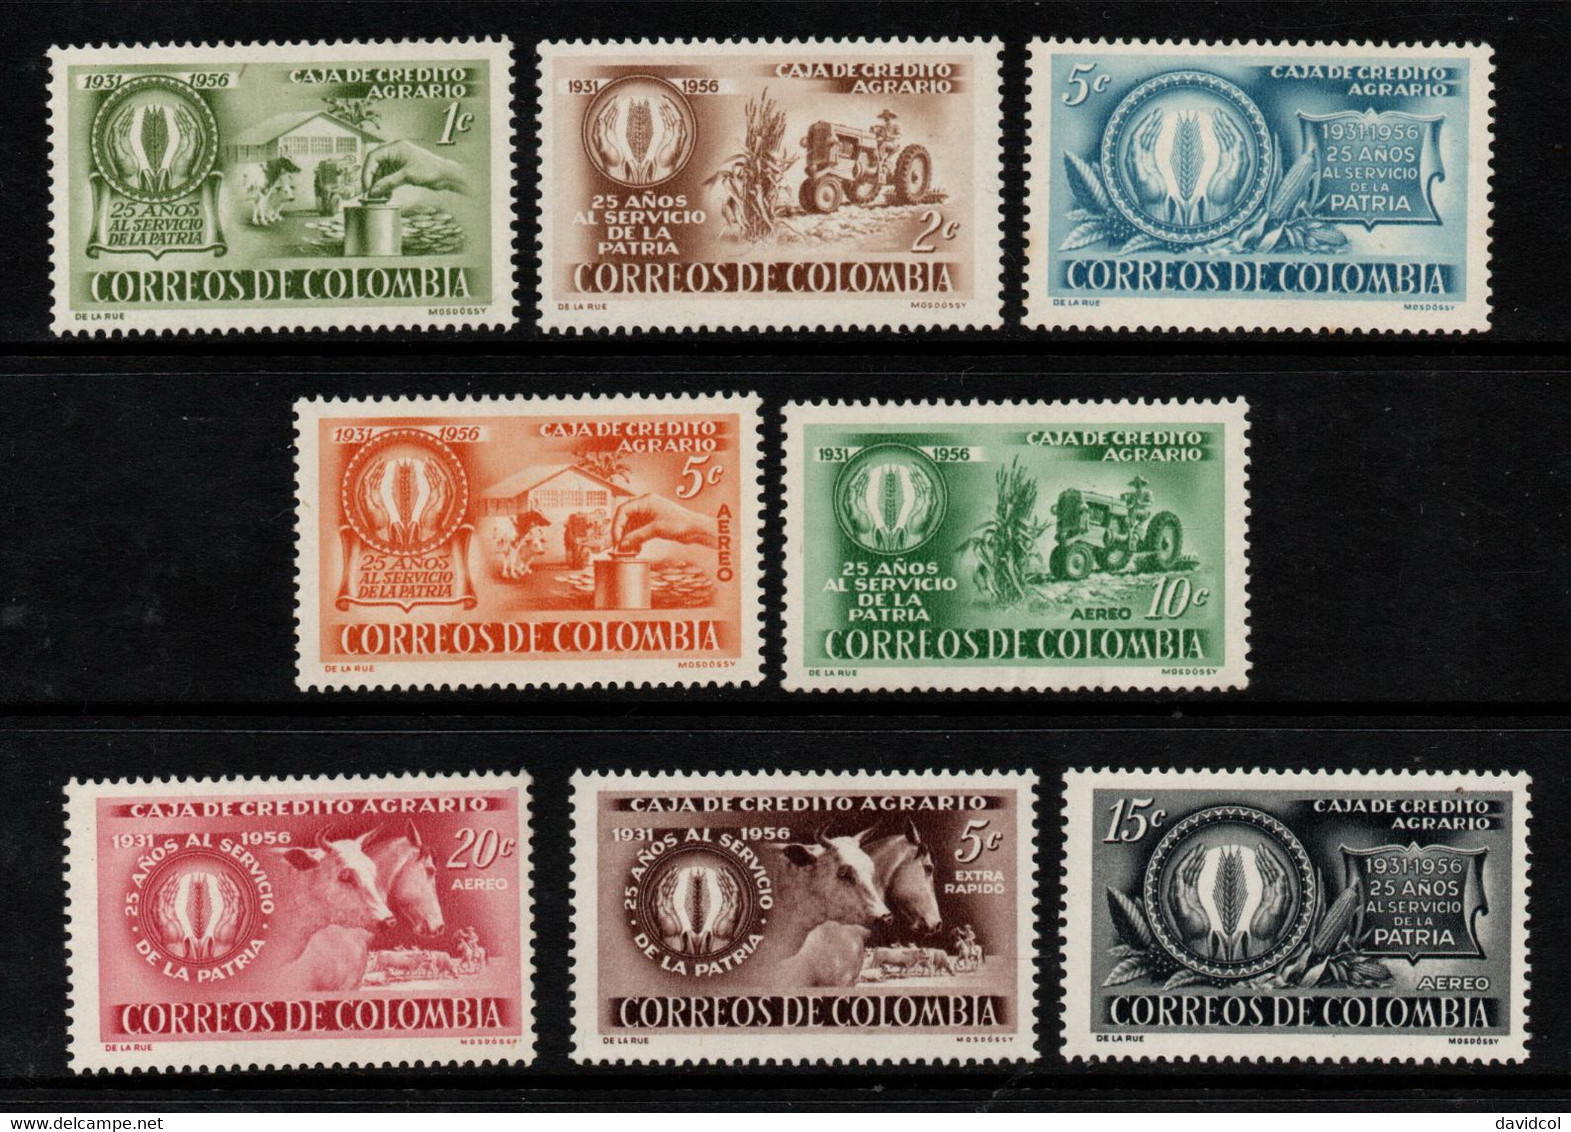 01- KOLUMBIEN - 1957 - MNH - MI#: 798-805 - 50 YEARS BANK "CAJA DE CREDITO AGRARIO" - Colombia